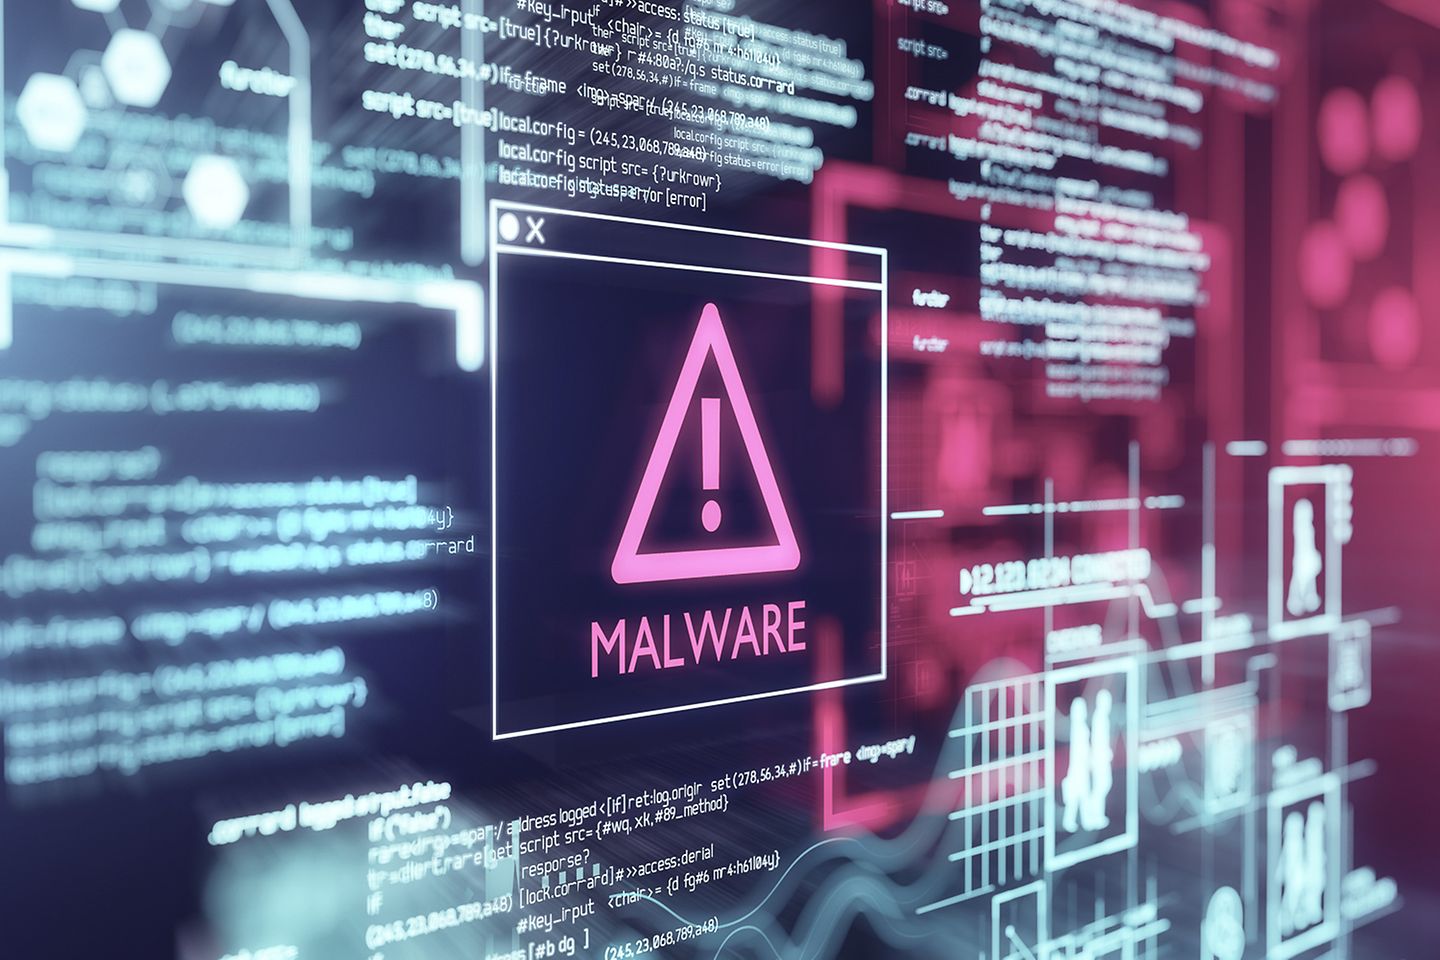 Pantalla con un mensaje de alerta sobre un malware detectado